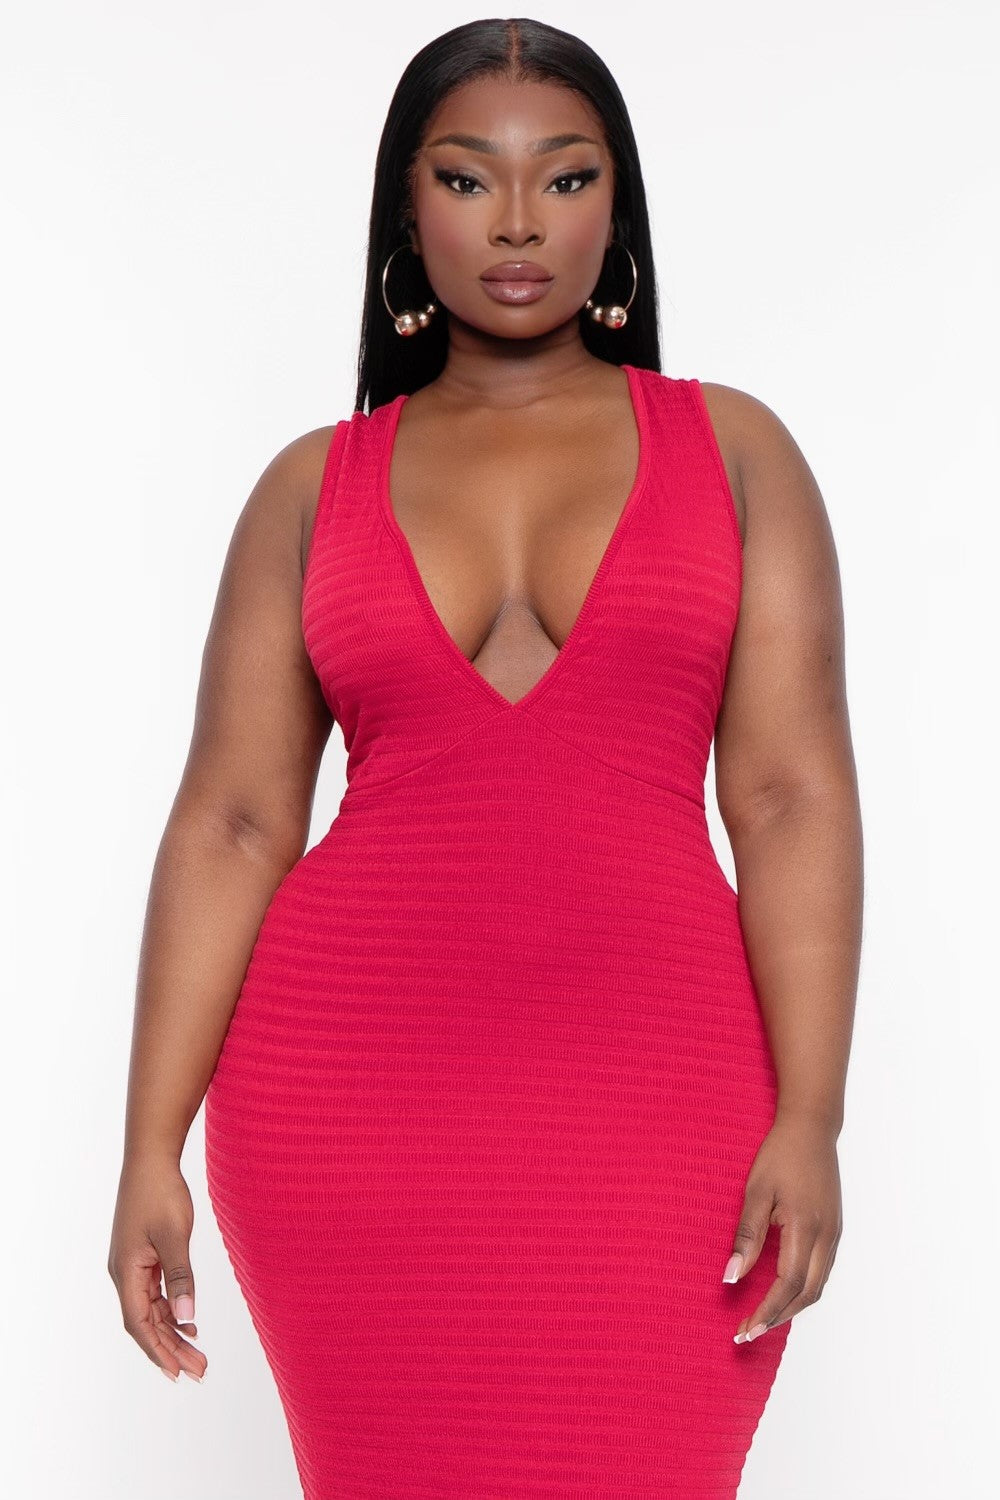 sexy red plus size dress